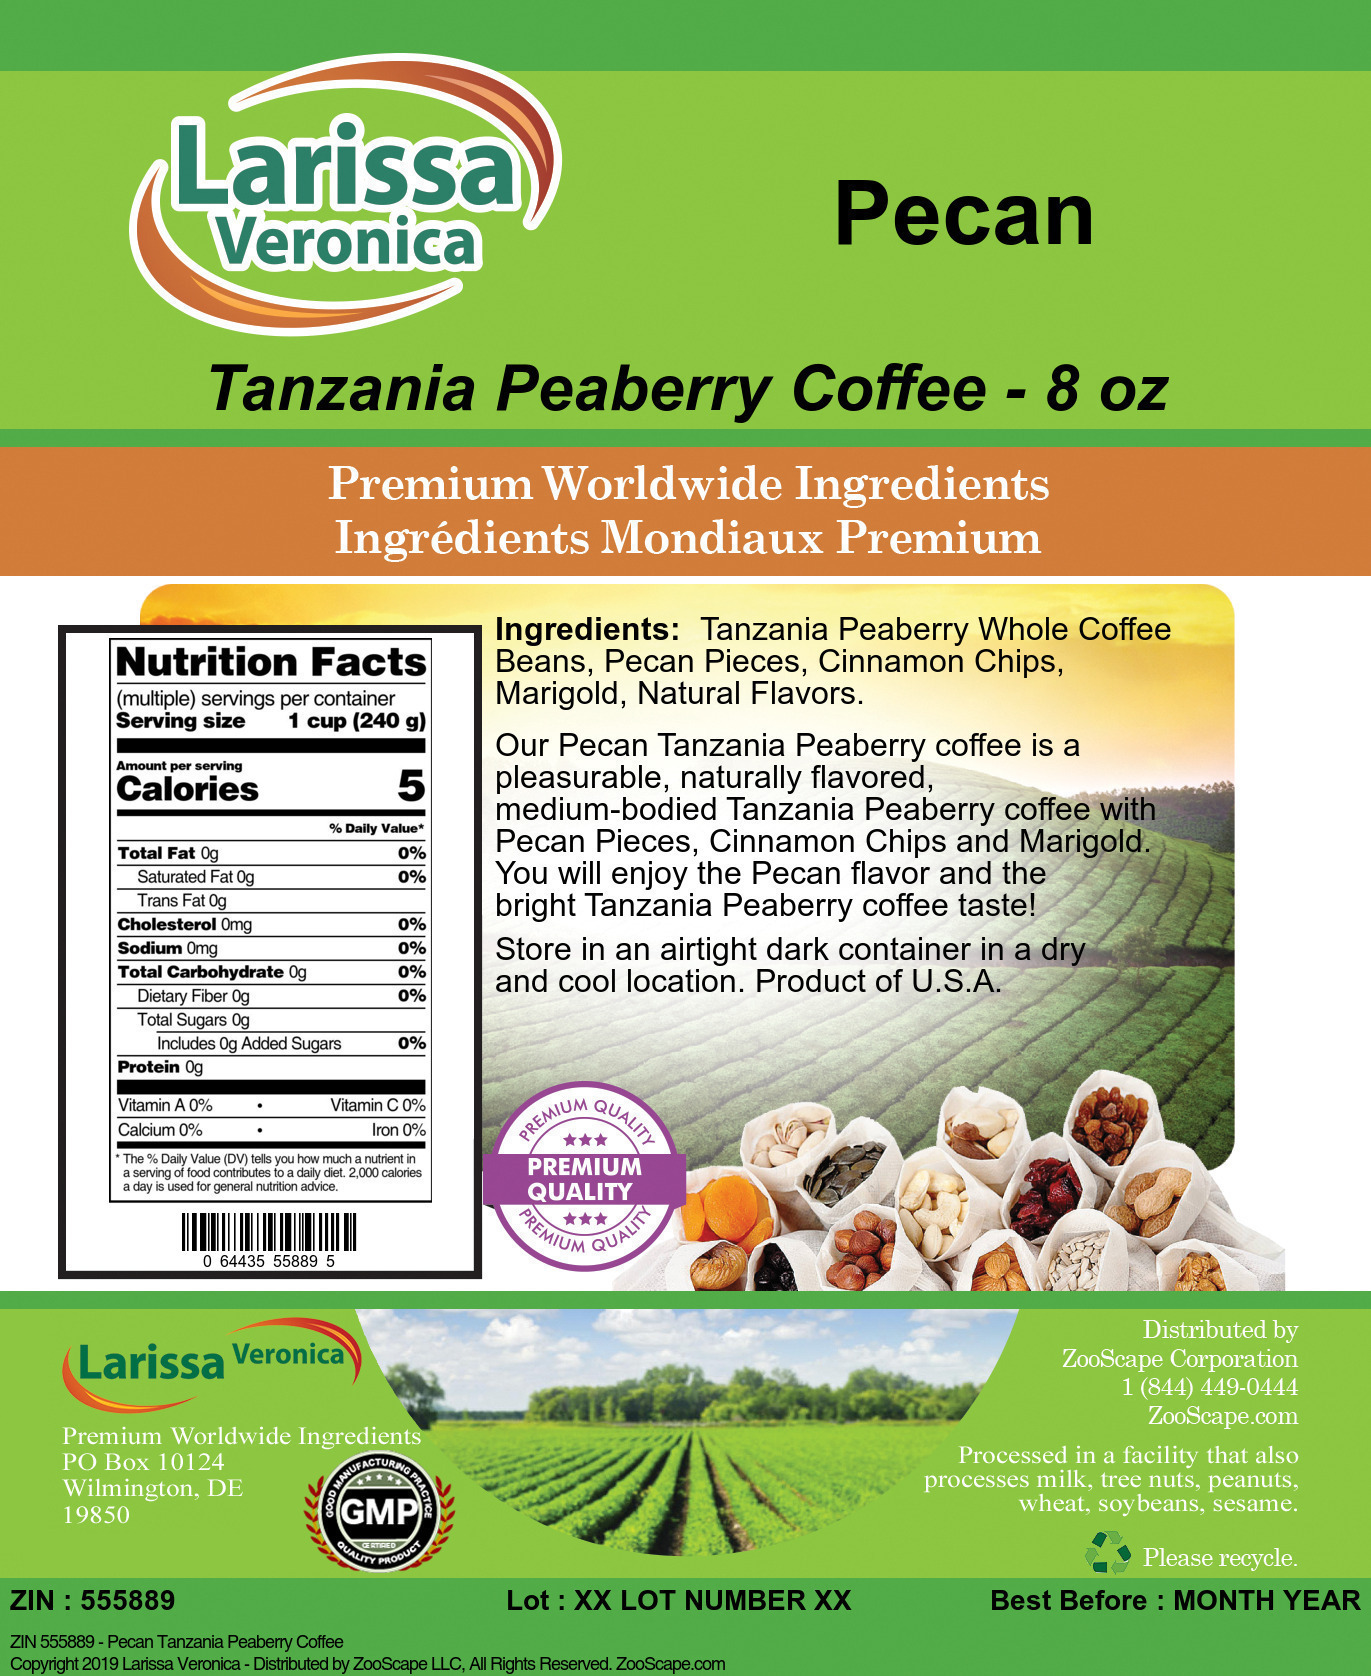 Pecan Tanzania Peaberry Coffee - Label